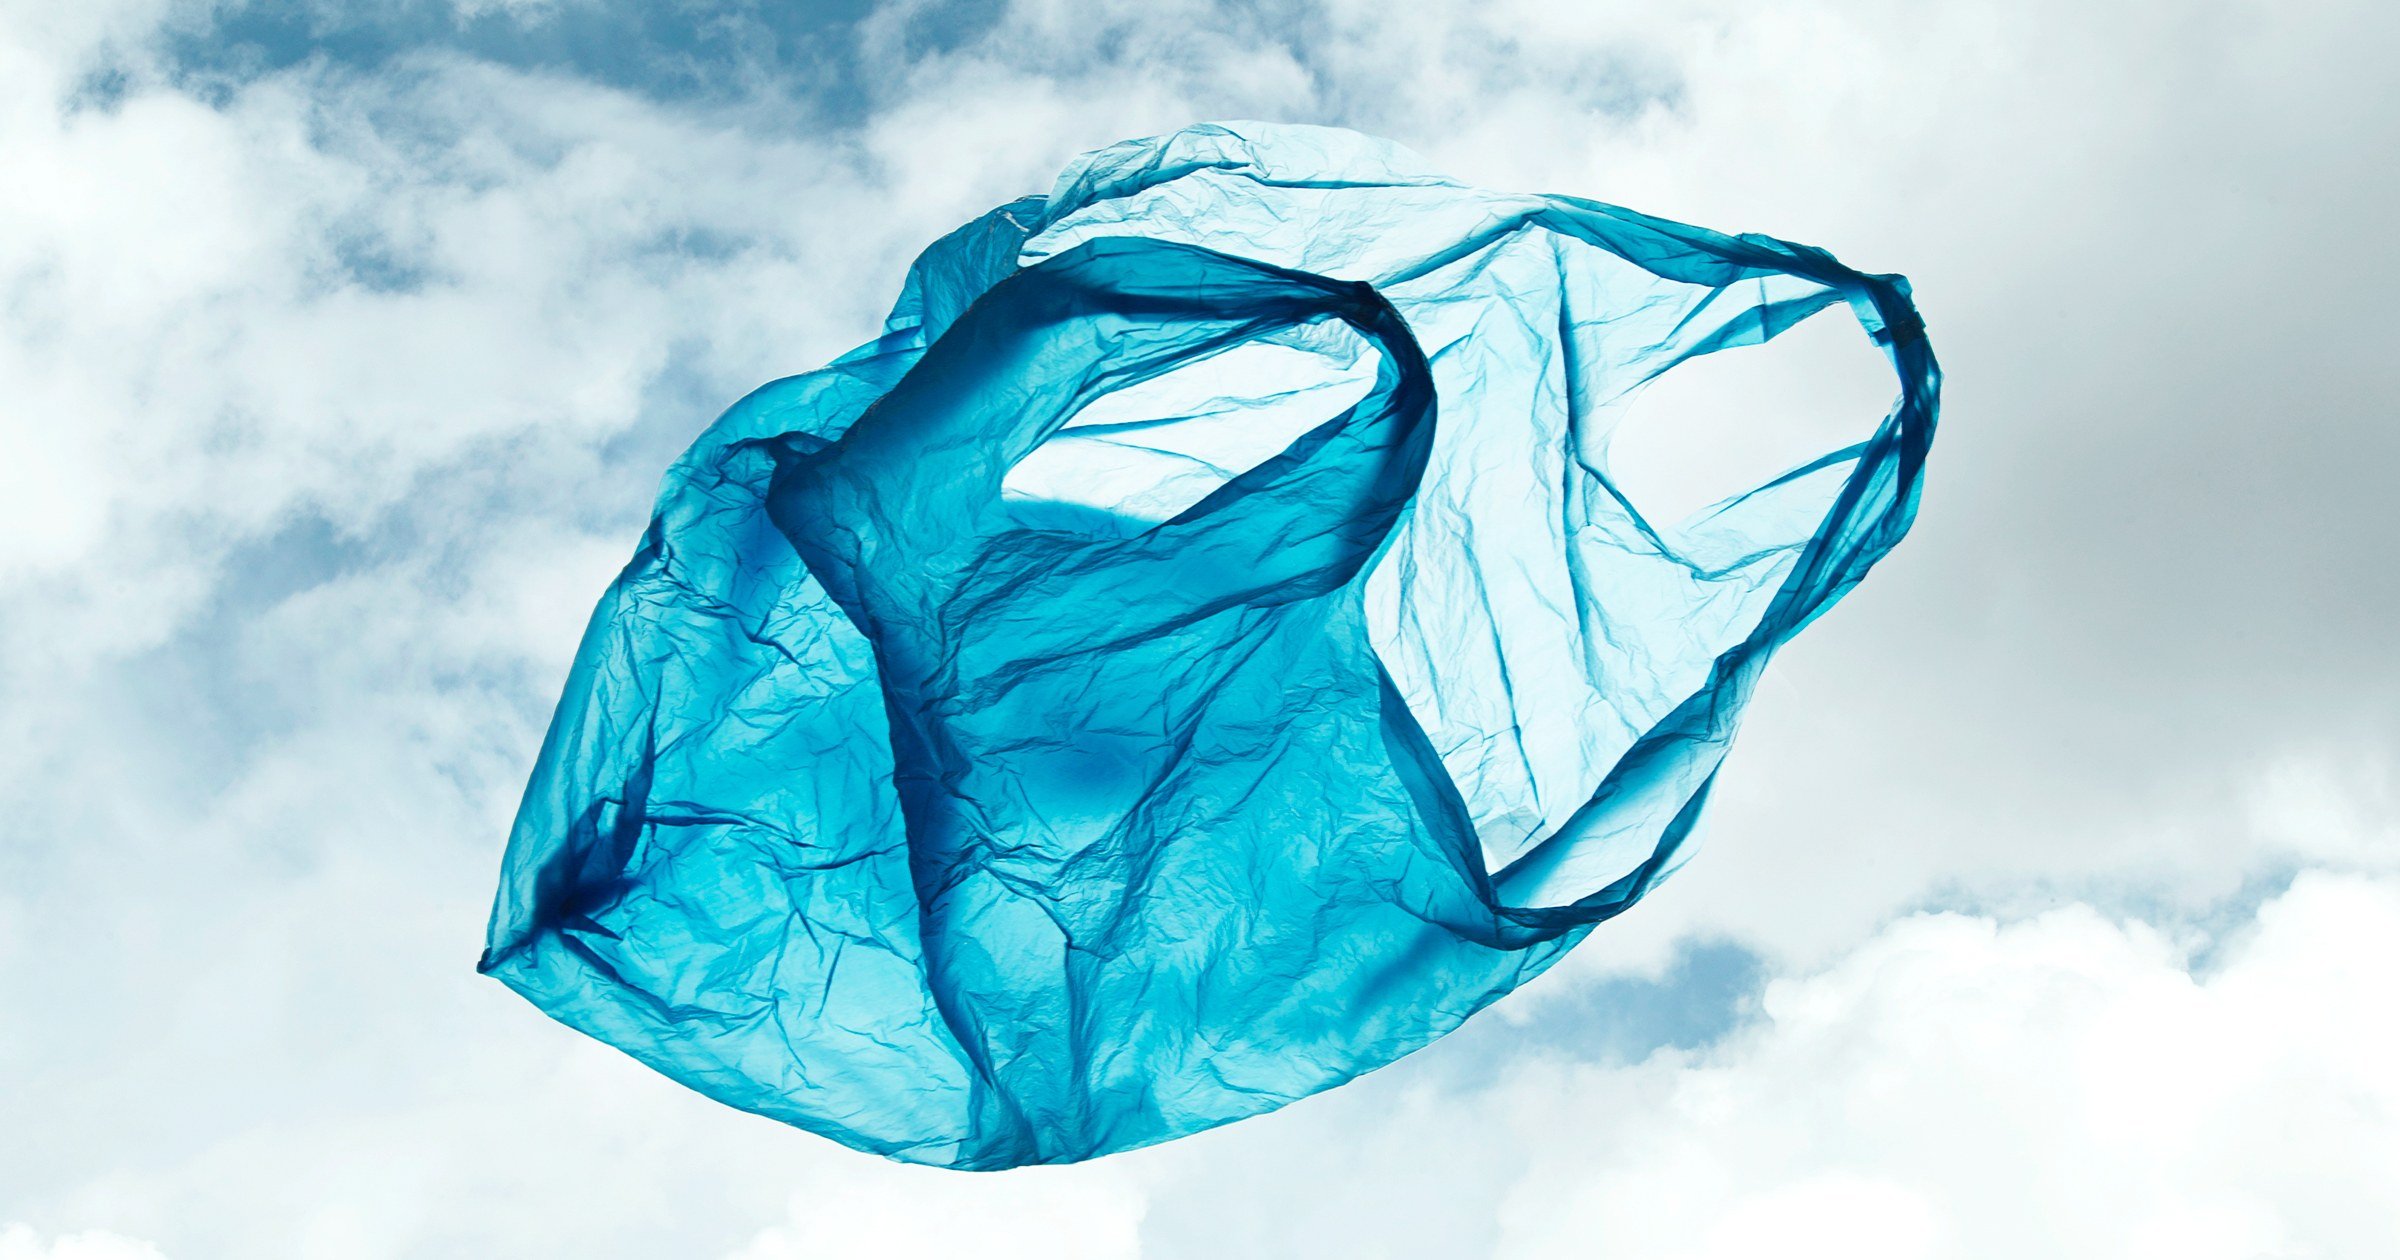 More information about "Στα 2,5 εκατ. ευρώ τα έσοδα από πλαστικές σακούλες"